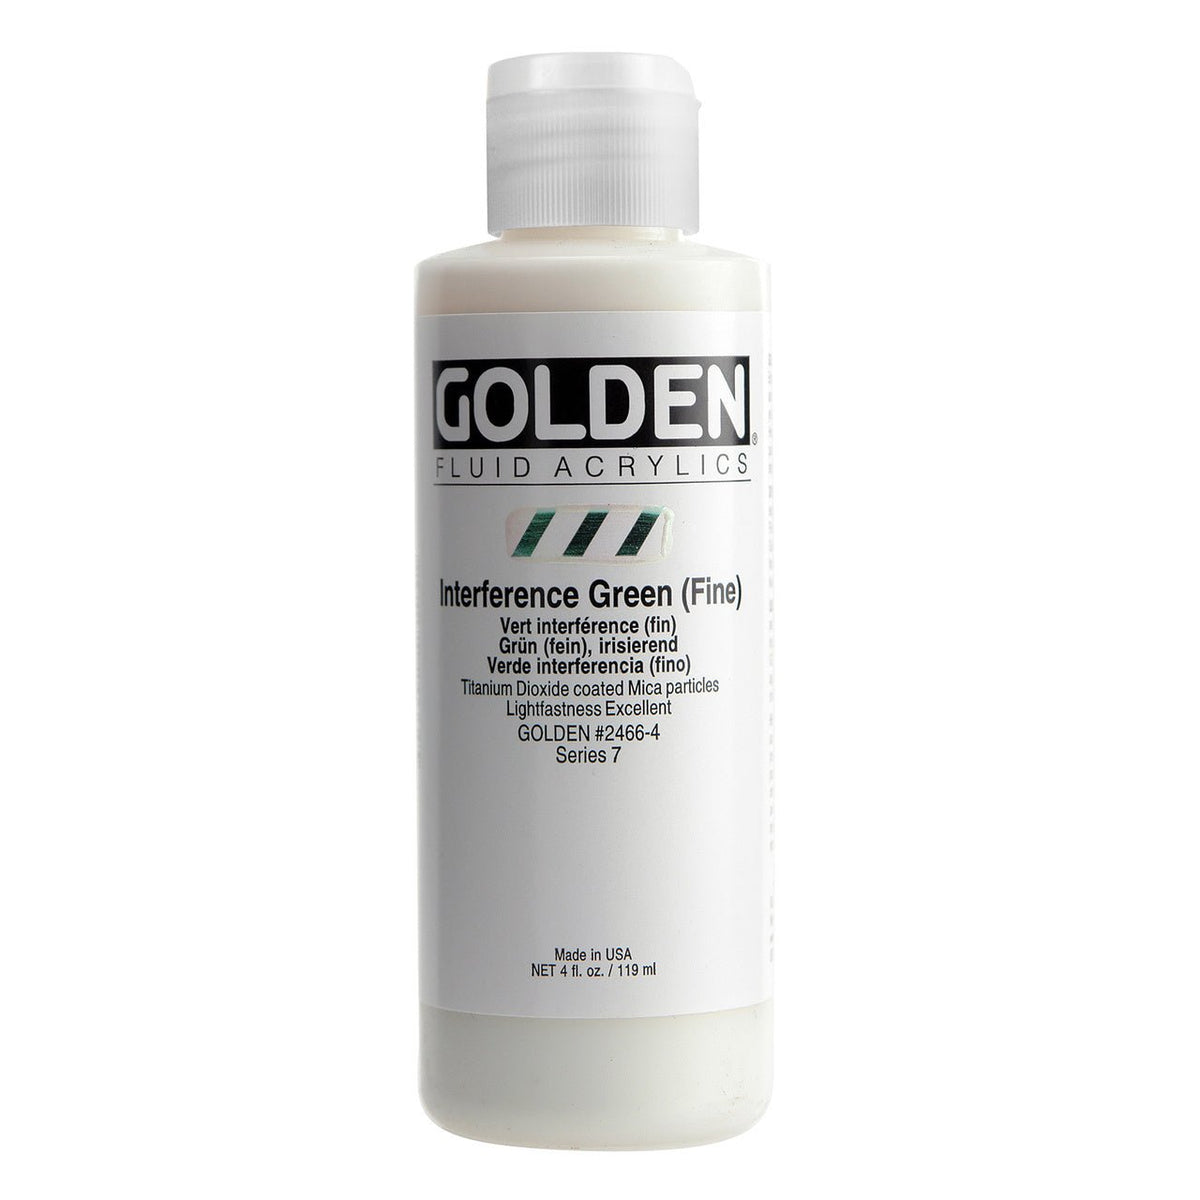 Golden Fluid Acrylic Interference Green (fine) 4 oz - merriartist.com